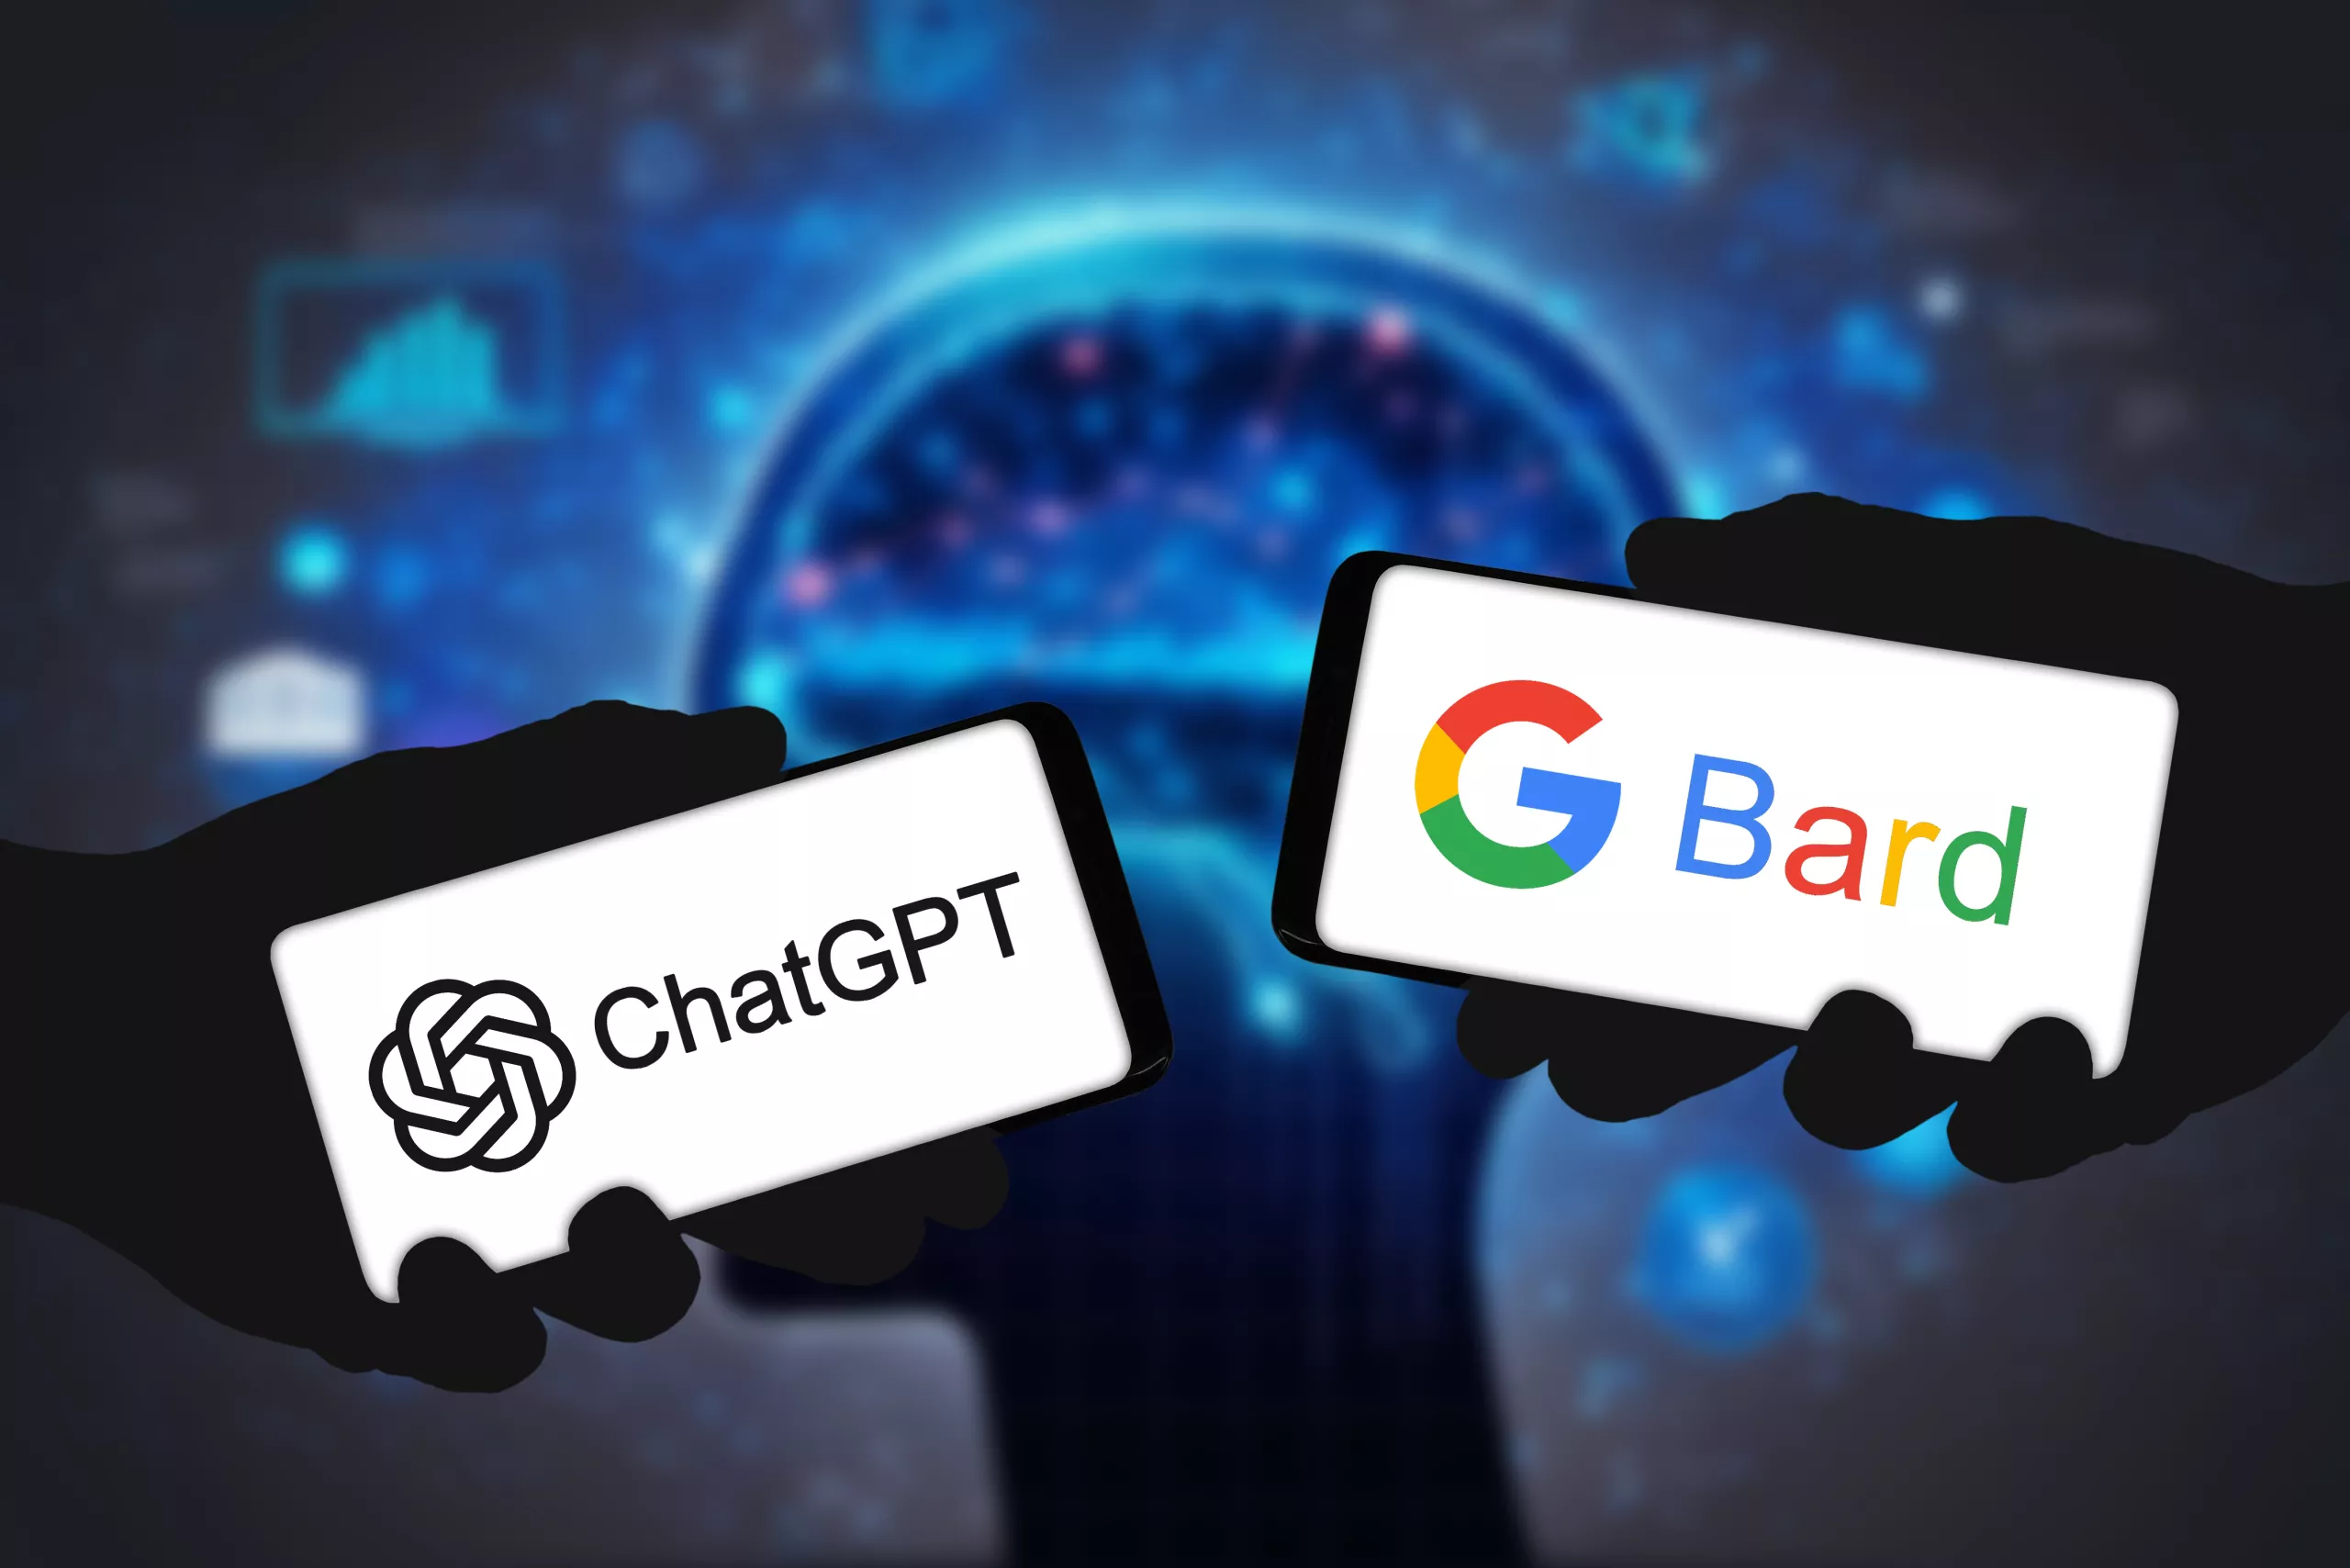 ChatGPT/Bard AI